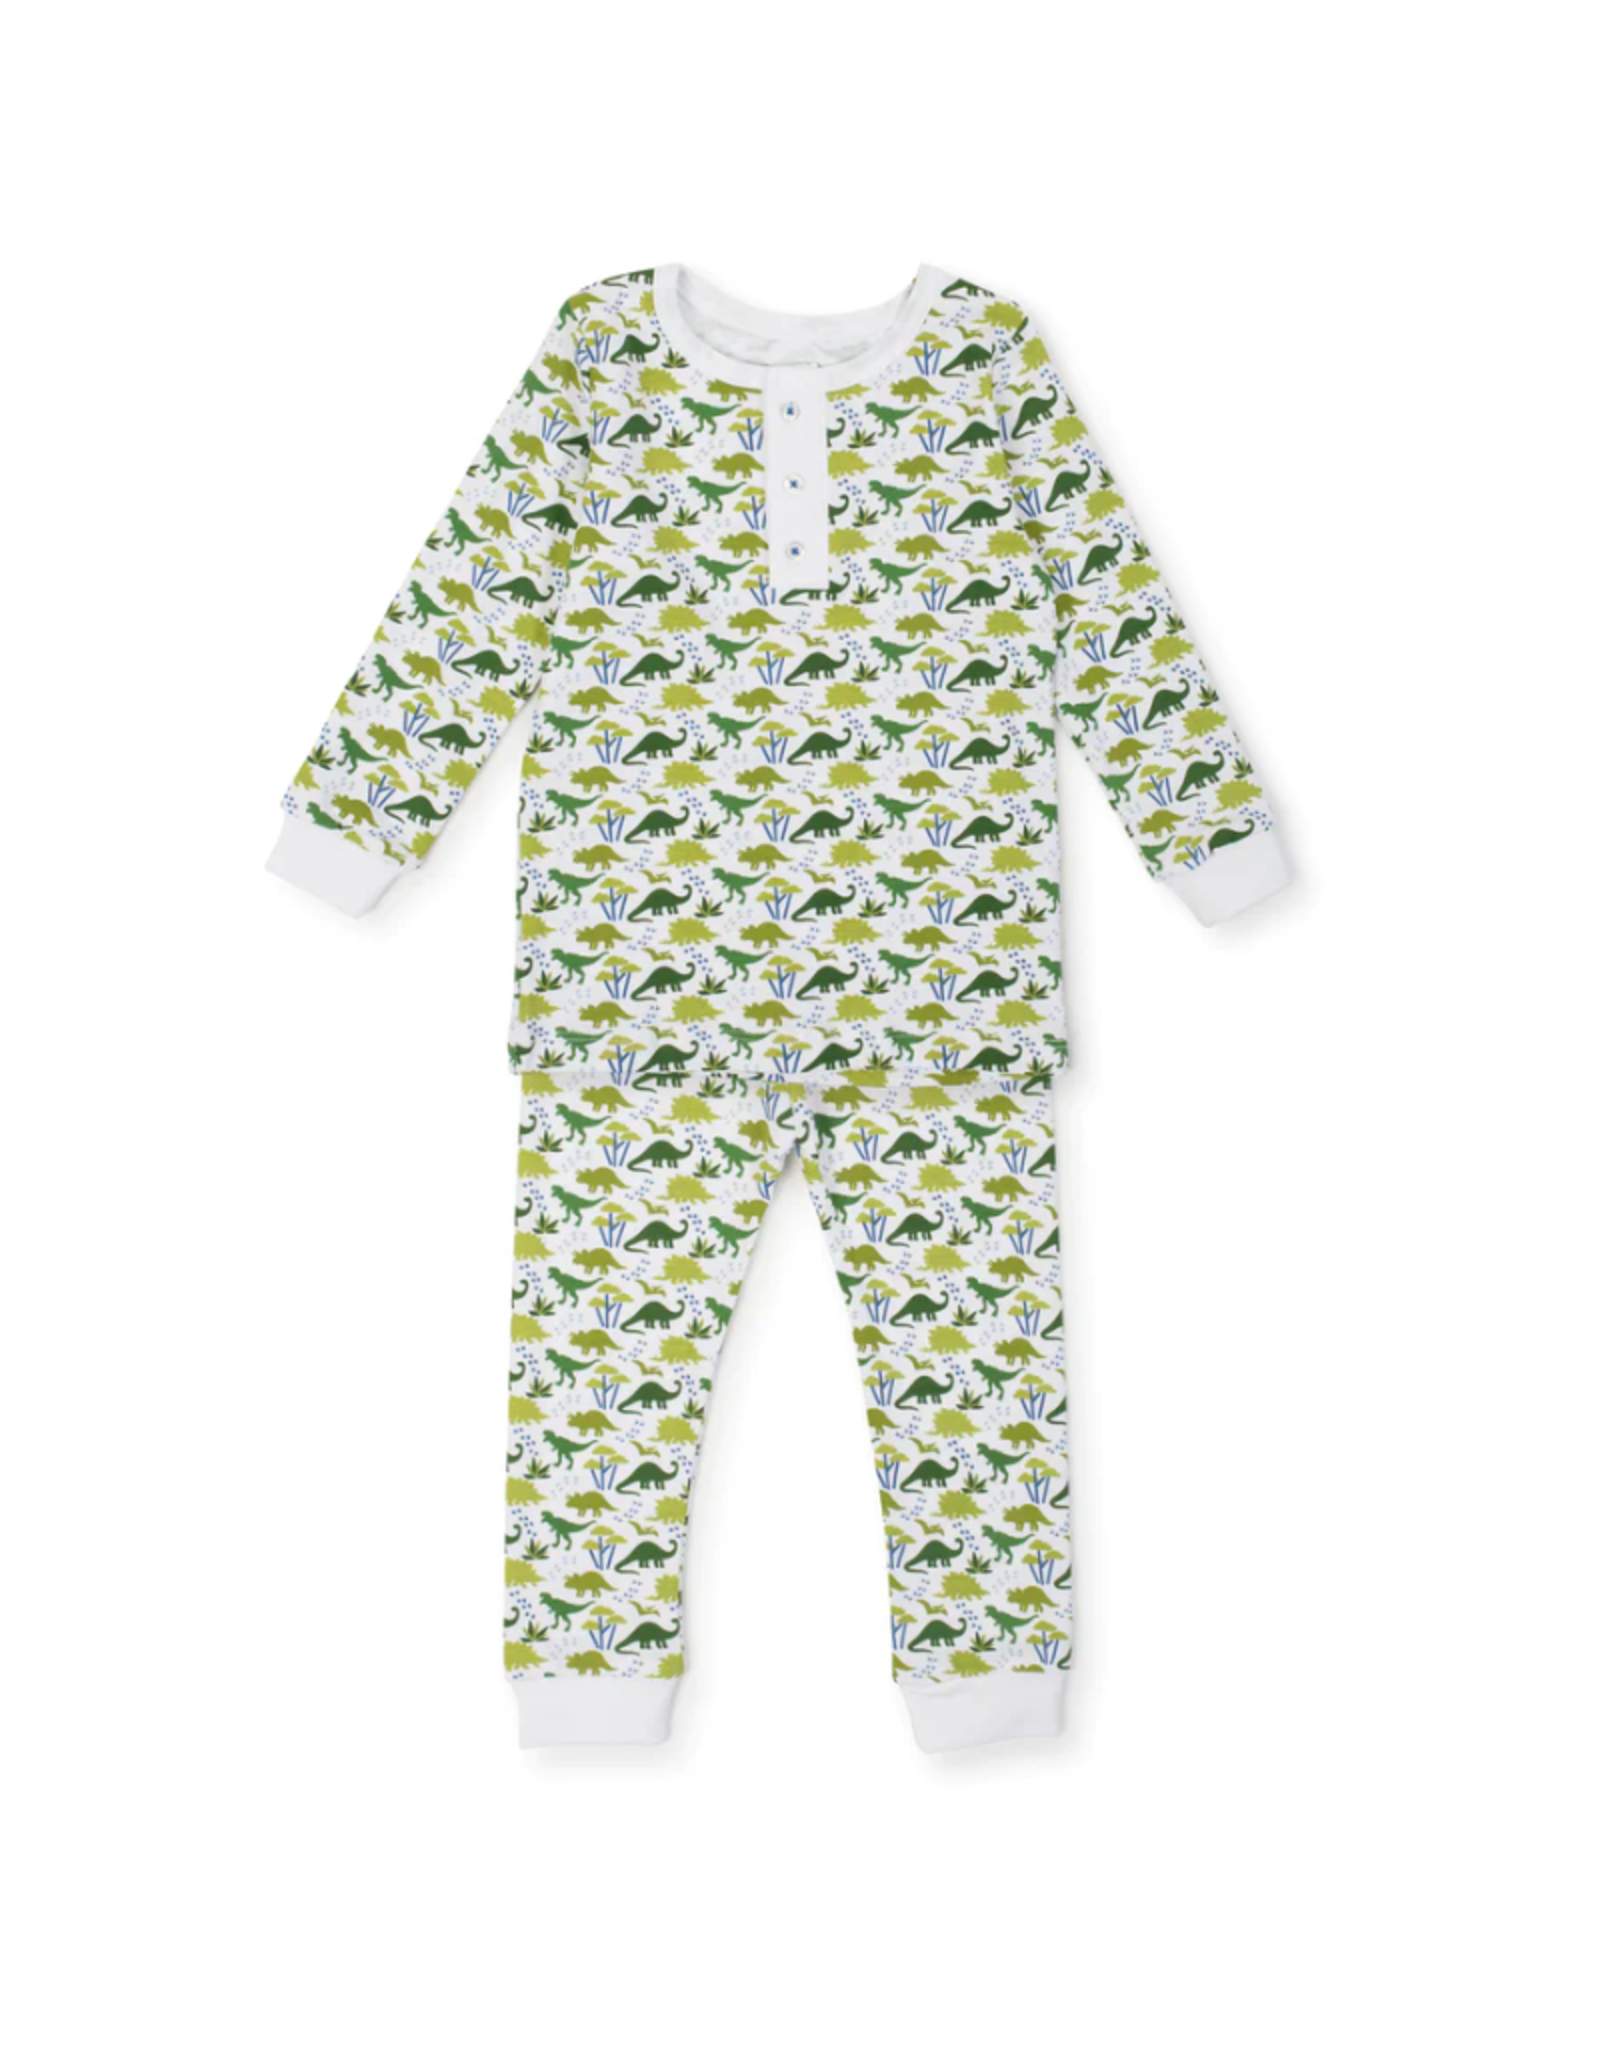 Lila + Hayes Jack Pajama Set, Dino Safari